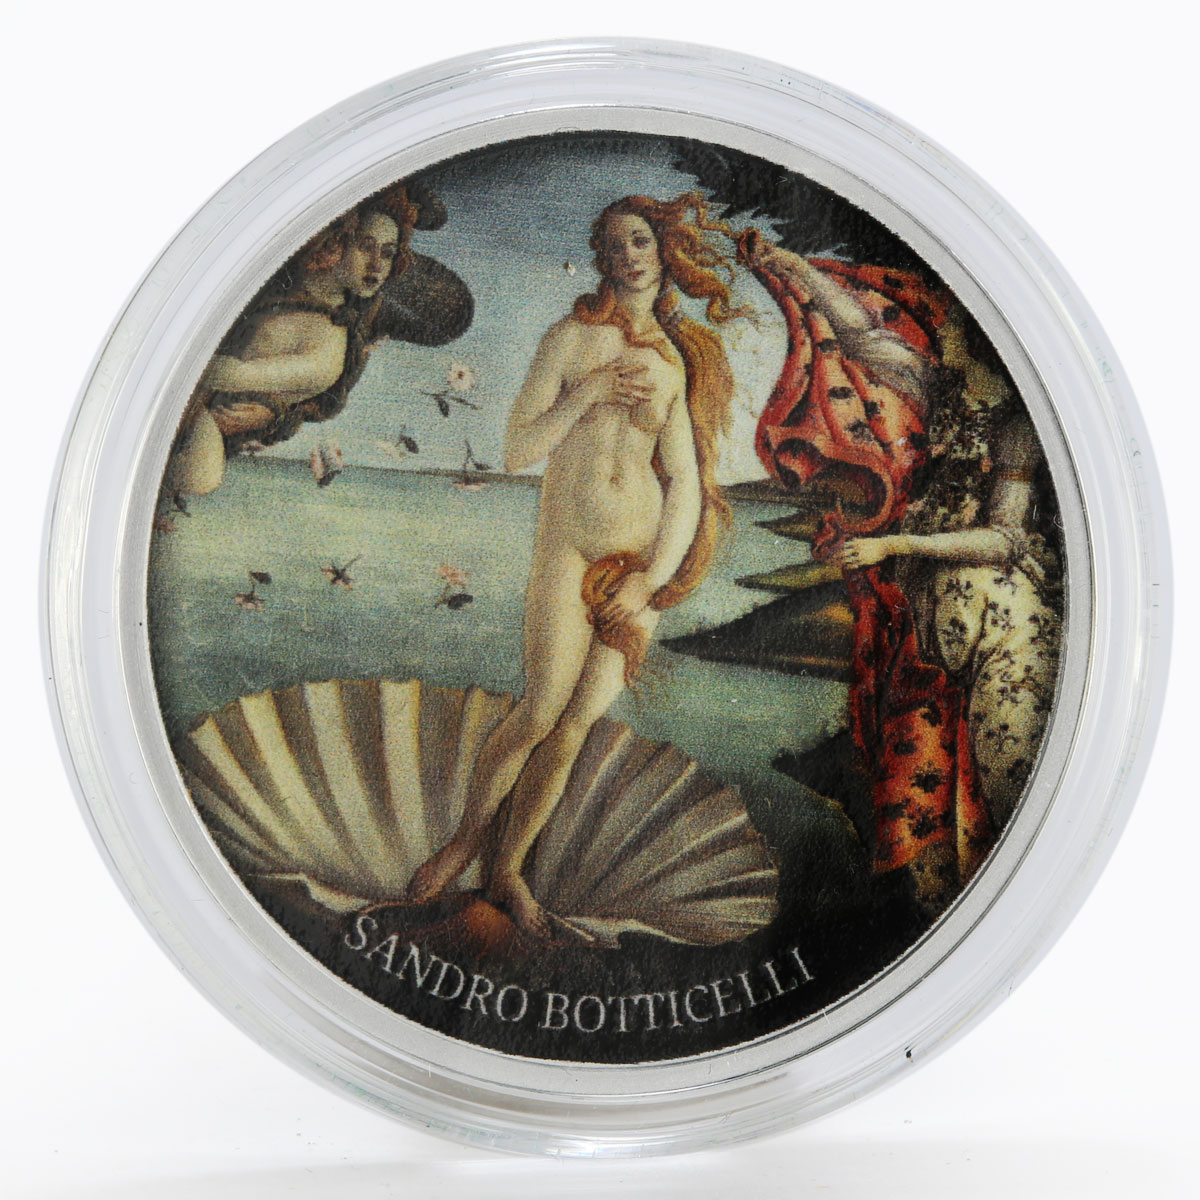 Cameroon 500 francs Sandro Botticelli Birth of Venus colored silver coin 2017